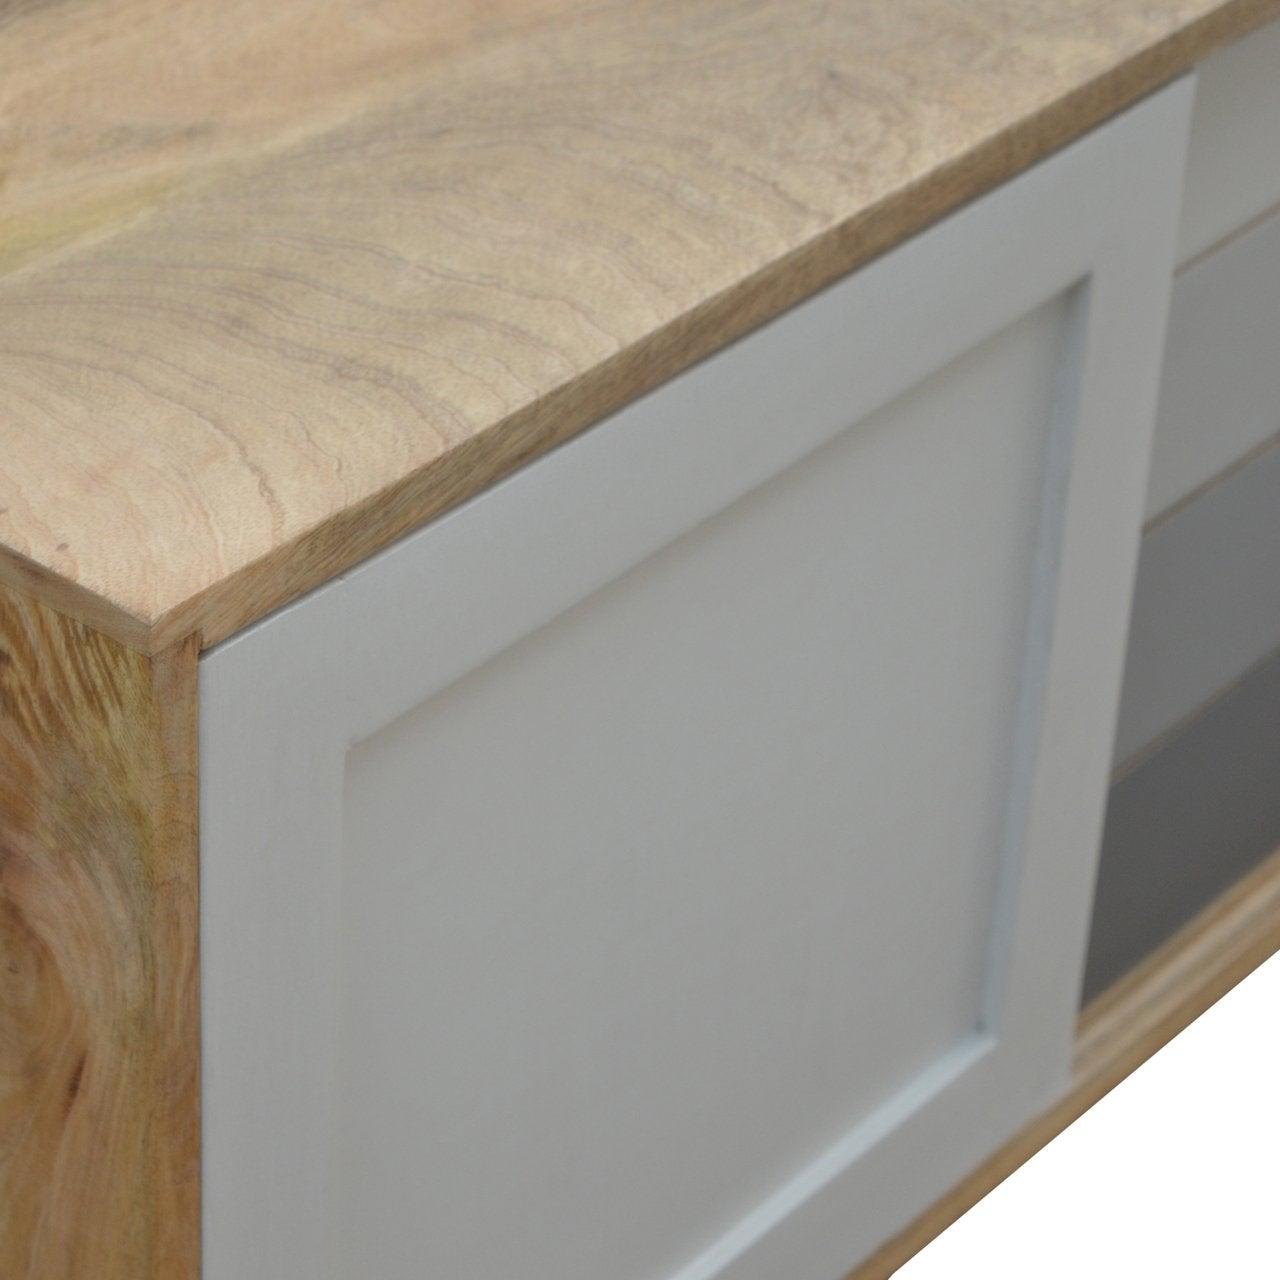 Nordic sliding cabinet with 4 drawers - crimblefest furniture - image 7